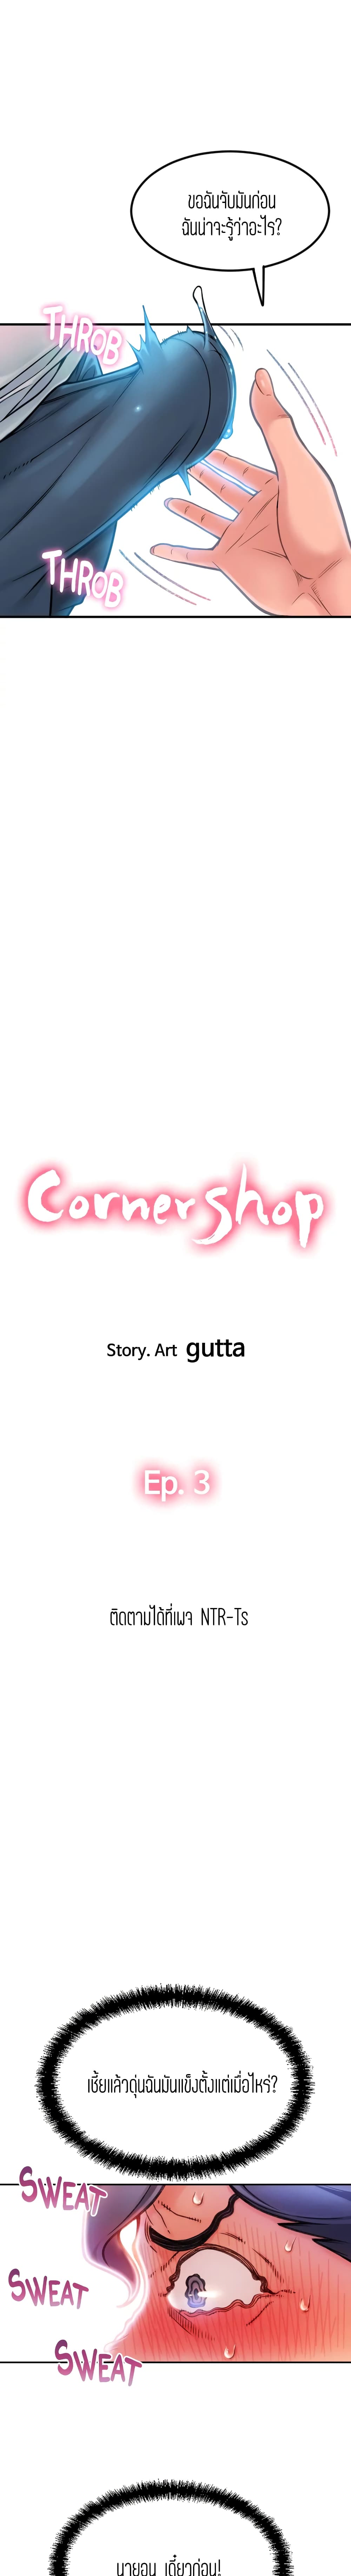 Corner Shop 3-3